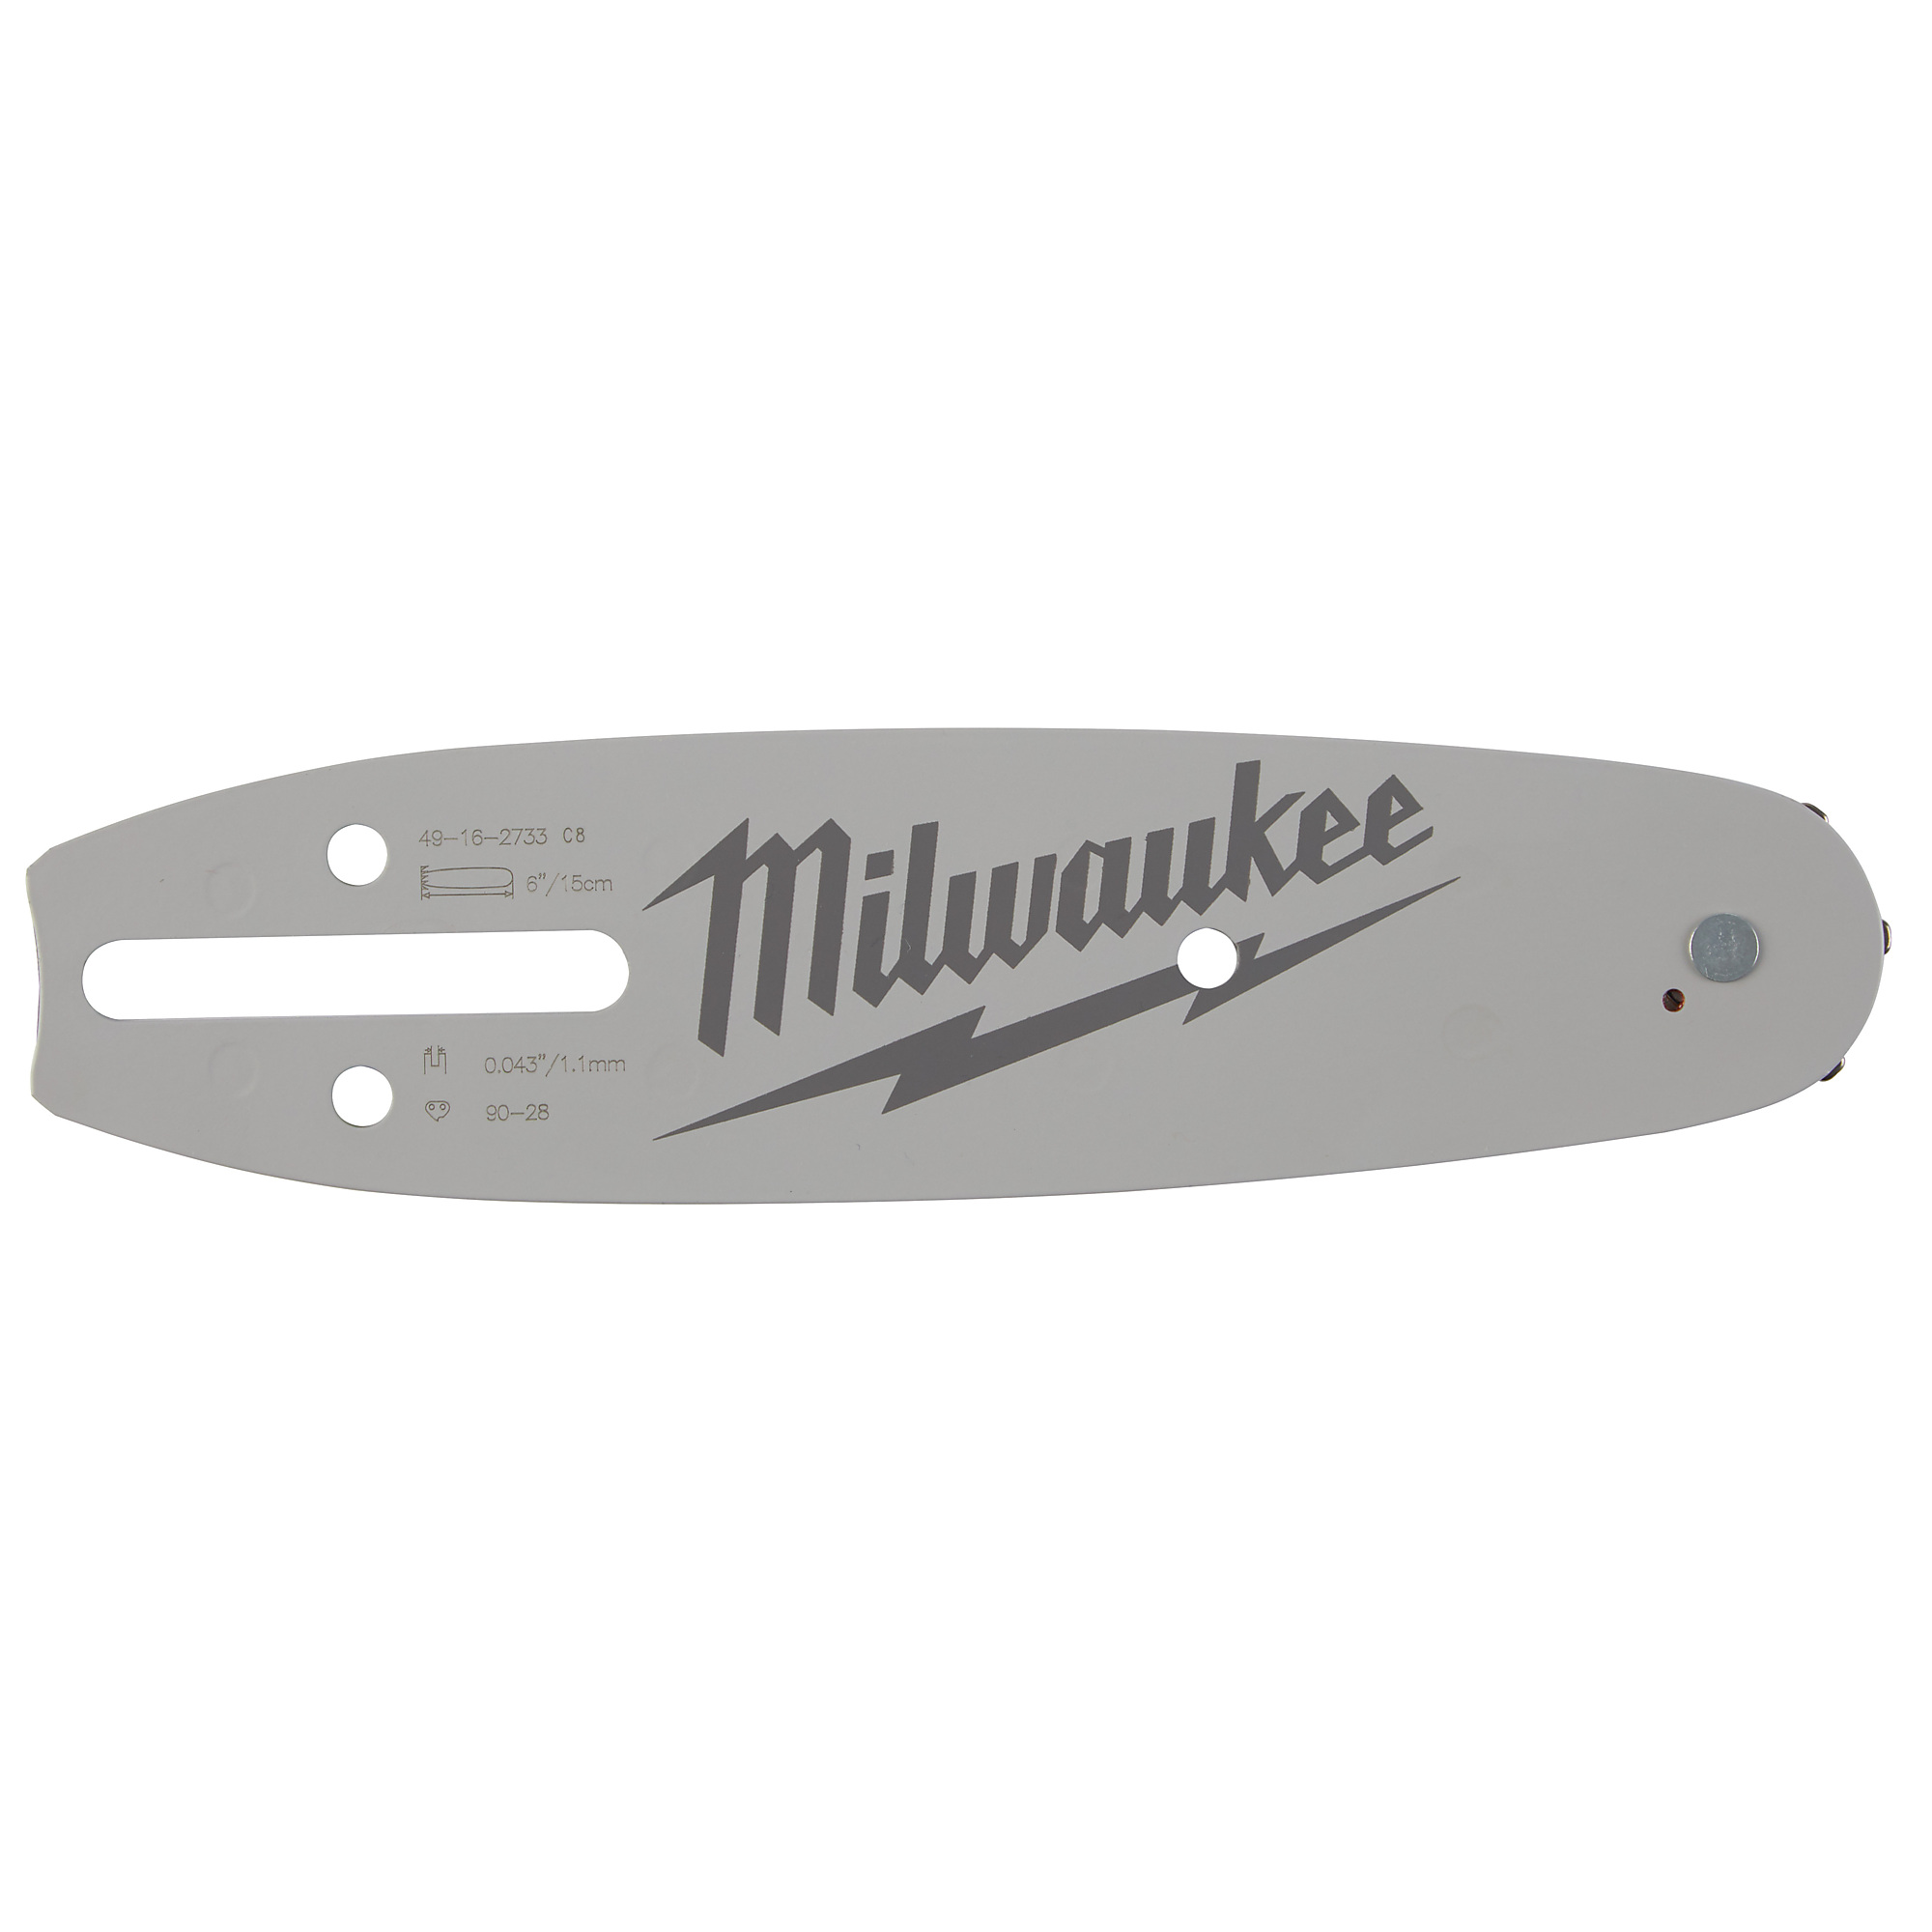 Milwaukee M12 FUEL Pruning Saw Guide Bar, 6Inch Bar Length, Model 49-16-2733